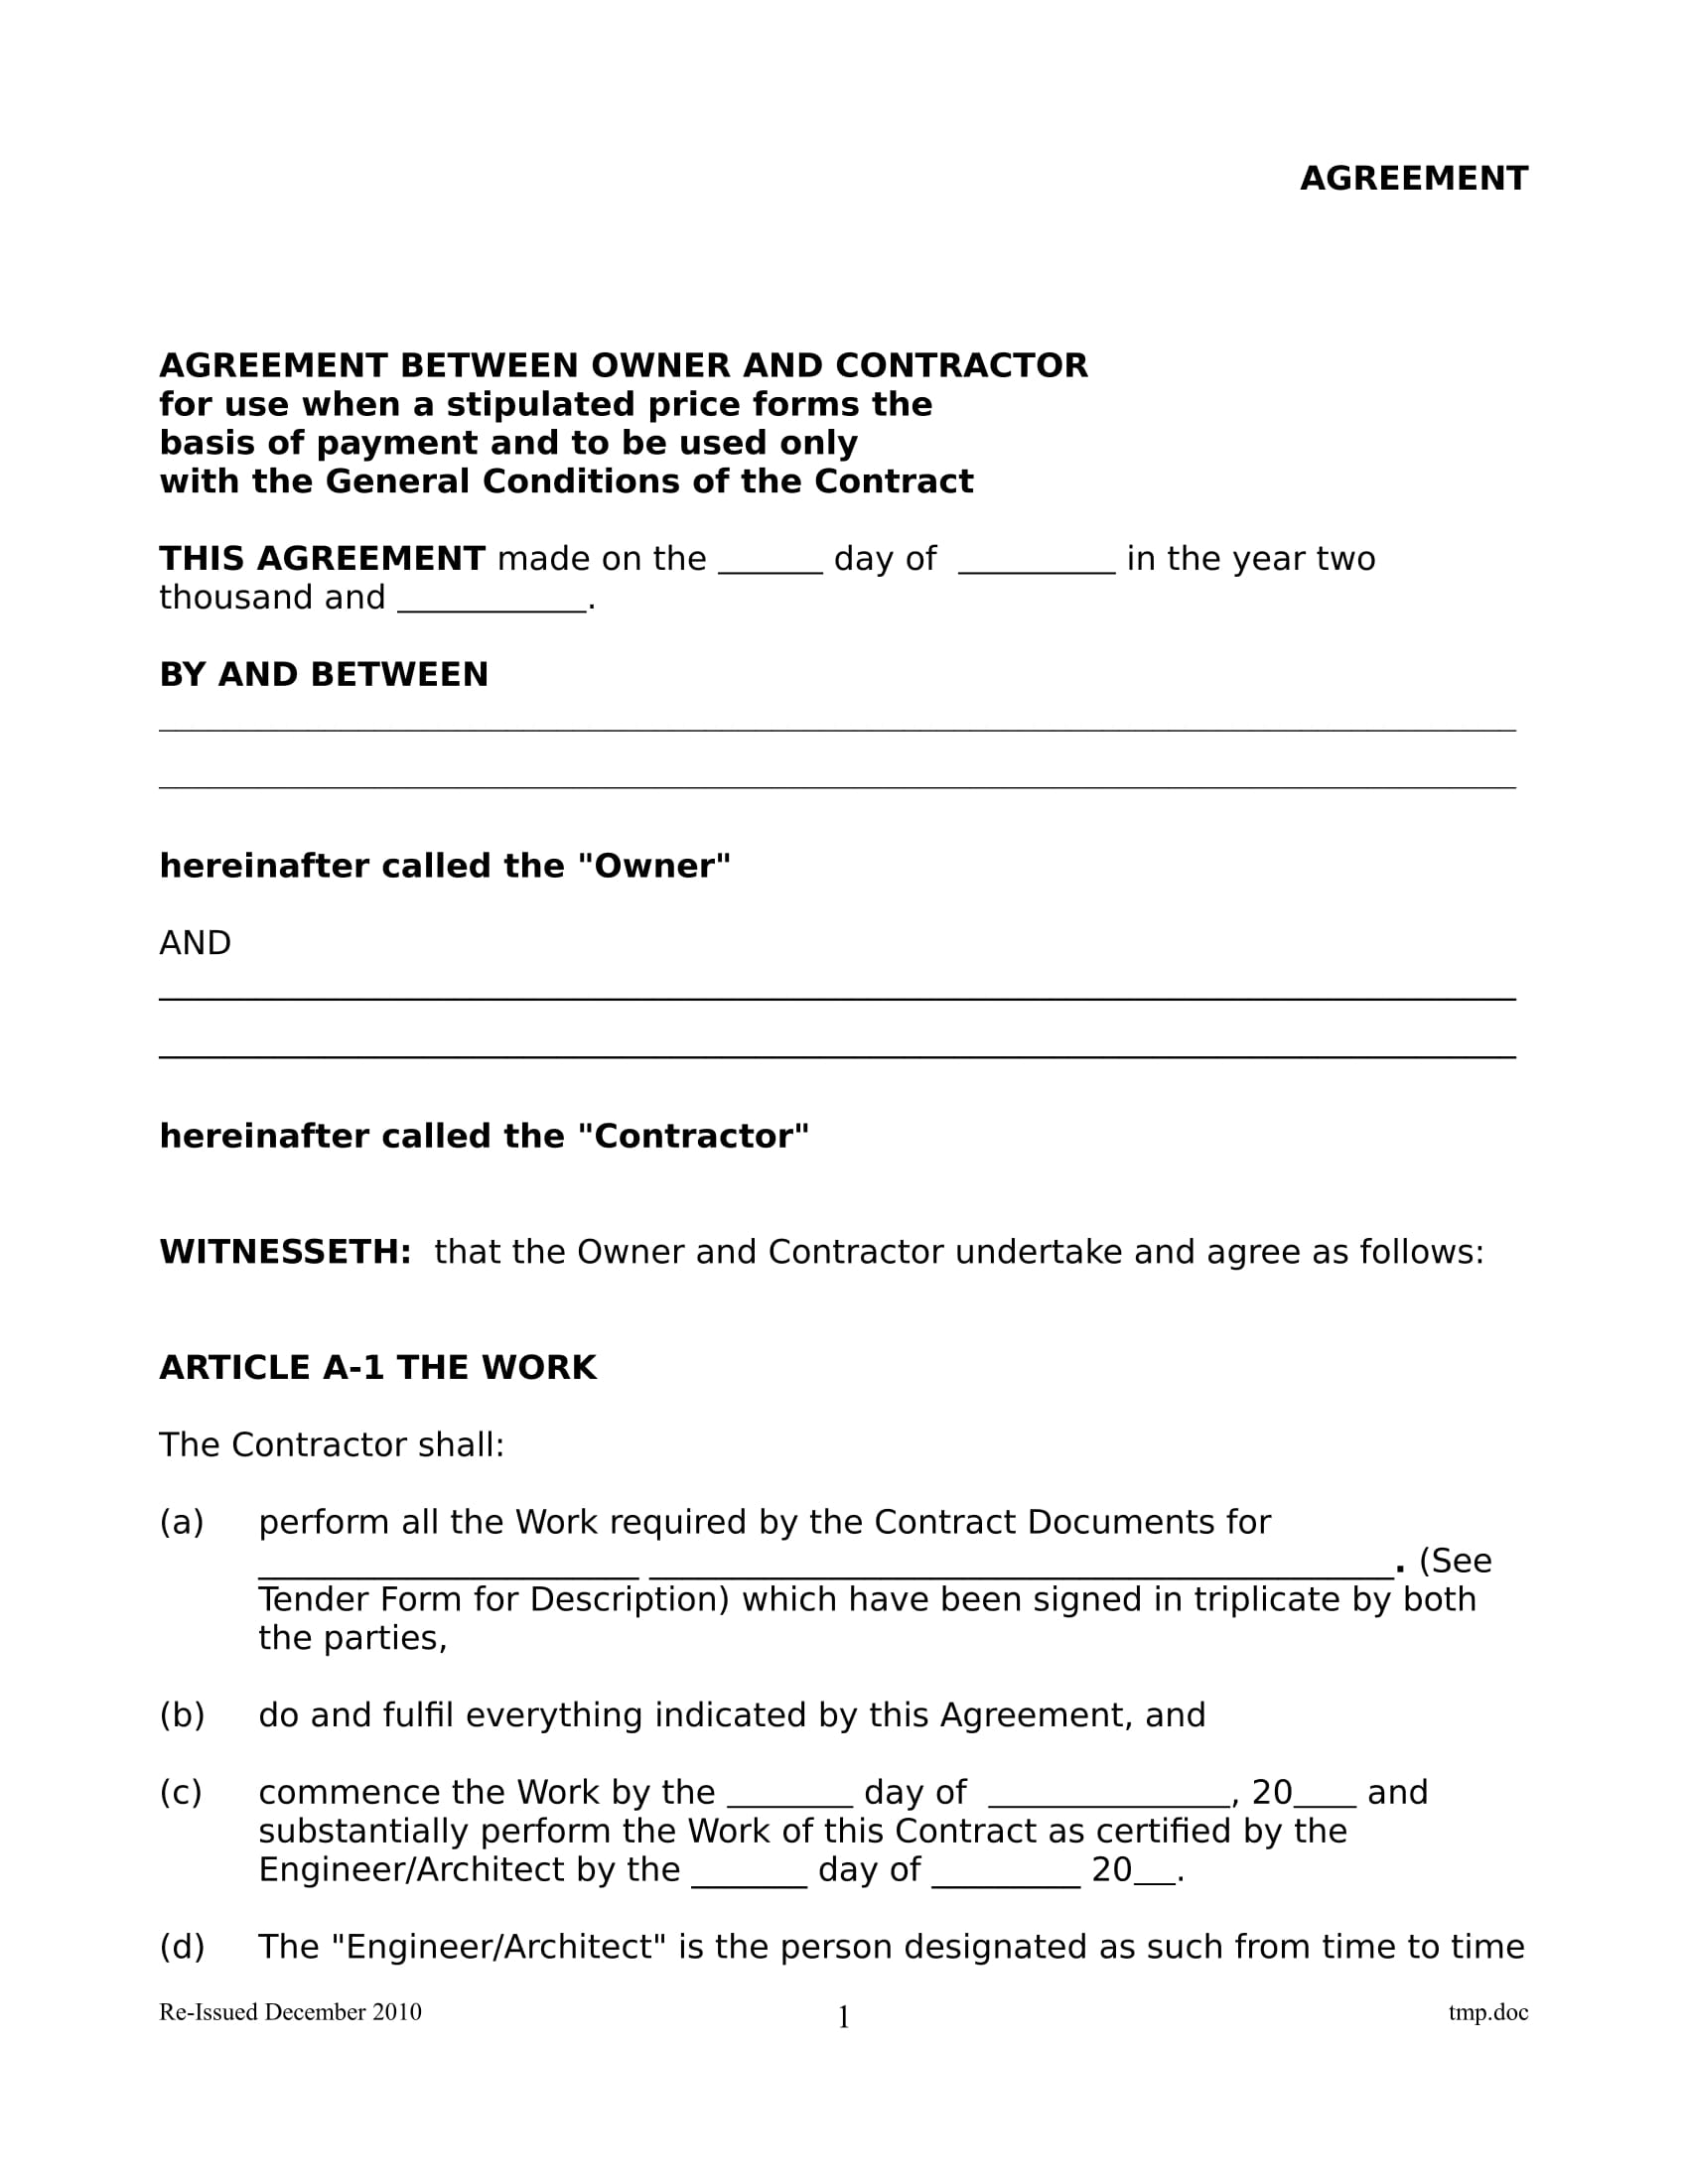 agreement between owner and contractor